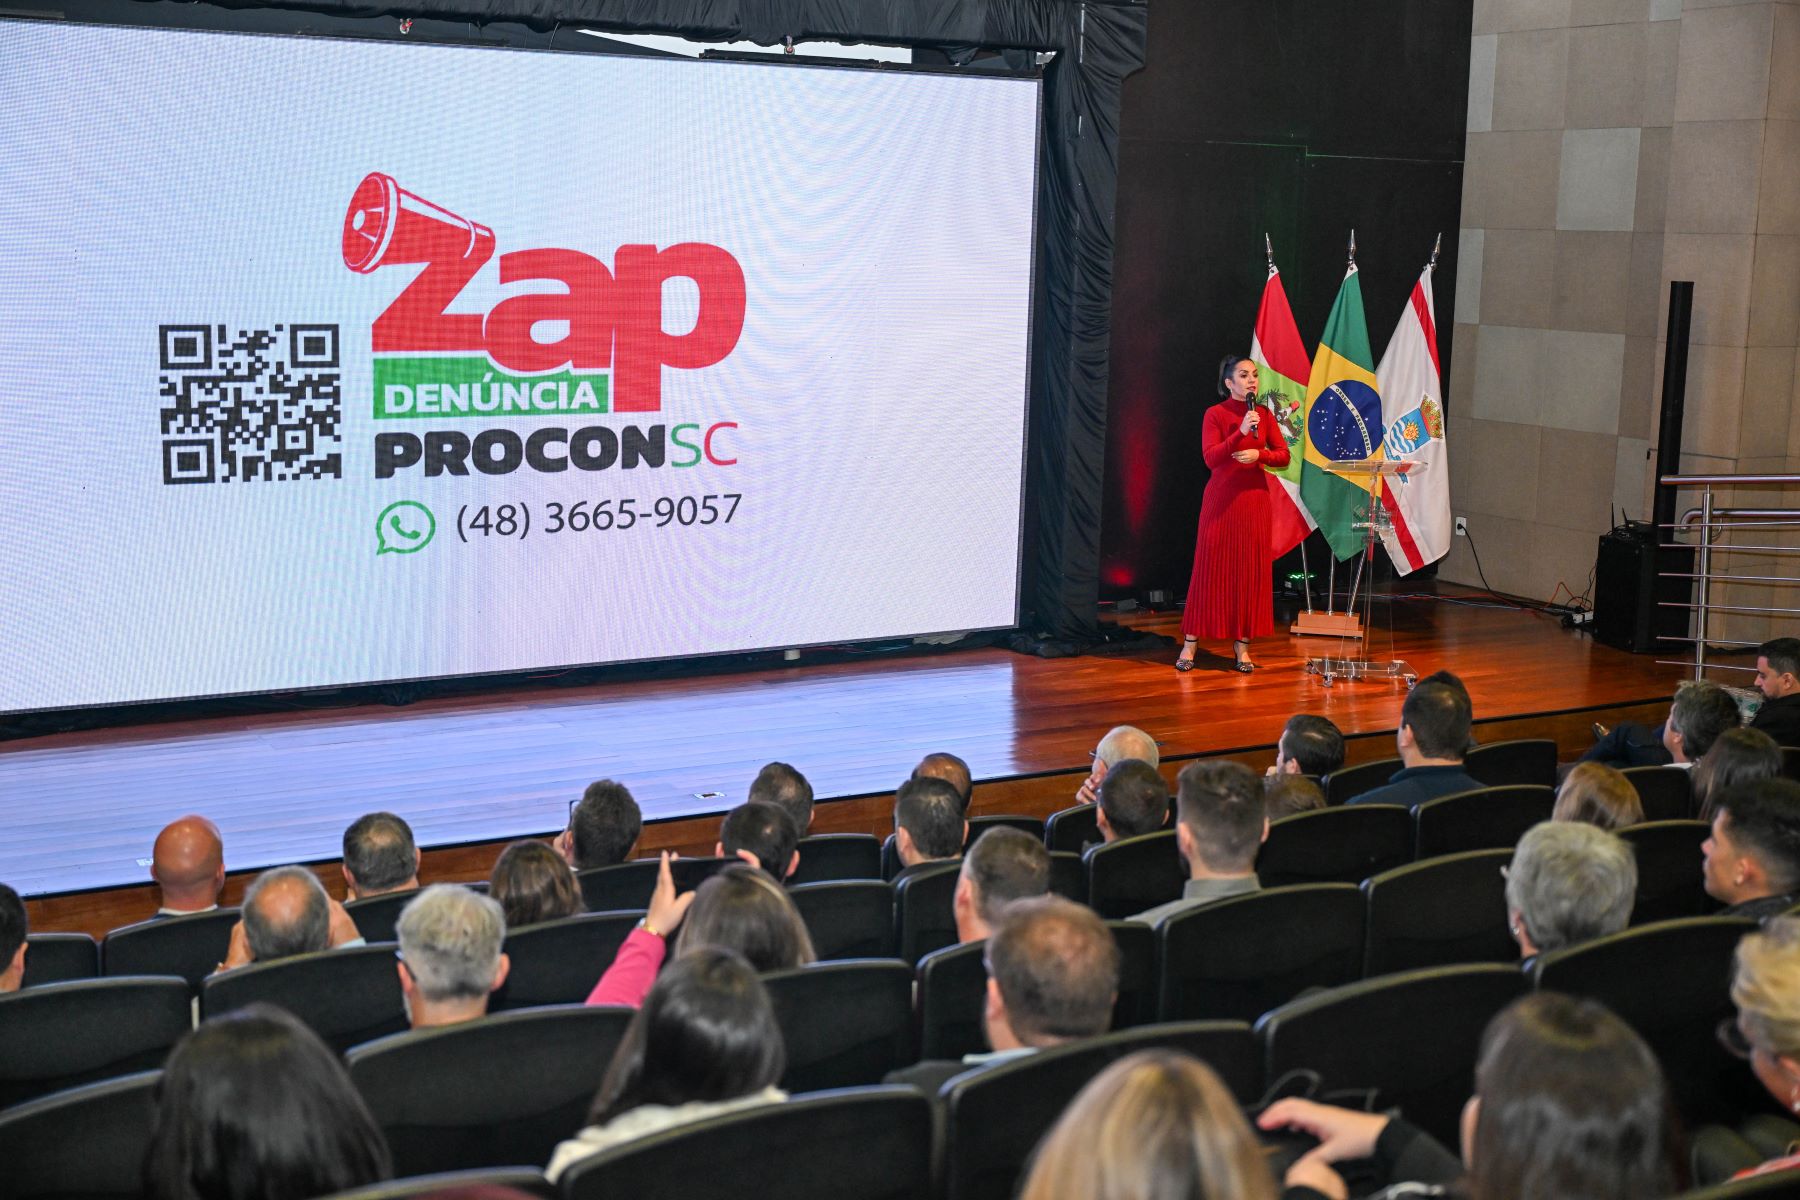 ZAP Denúncia é apresentado pelo Procon SC